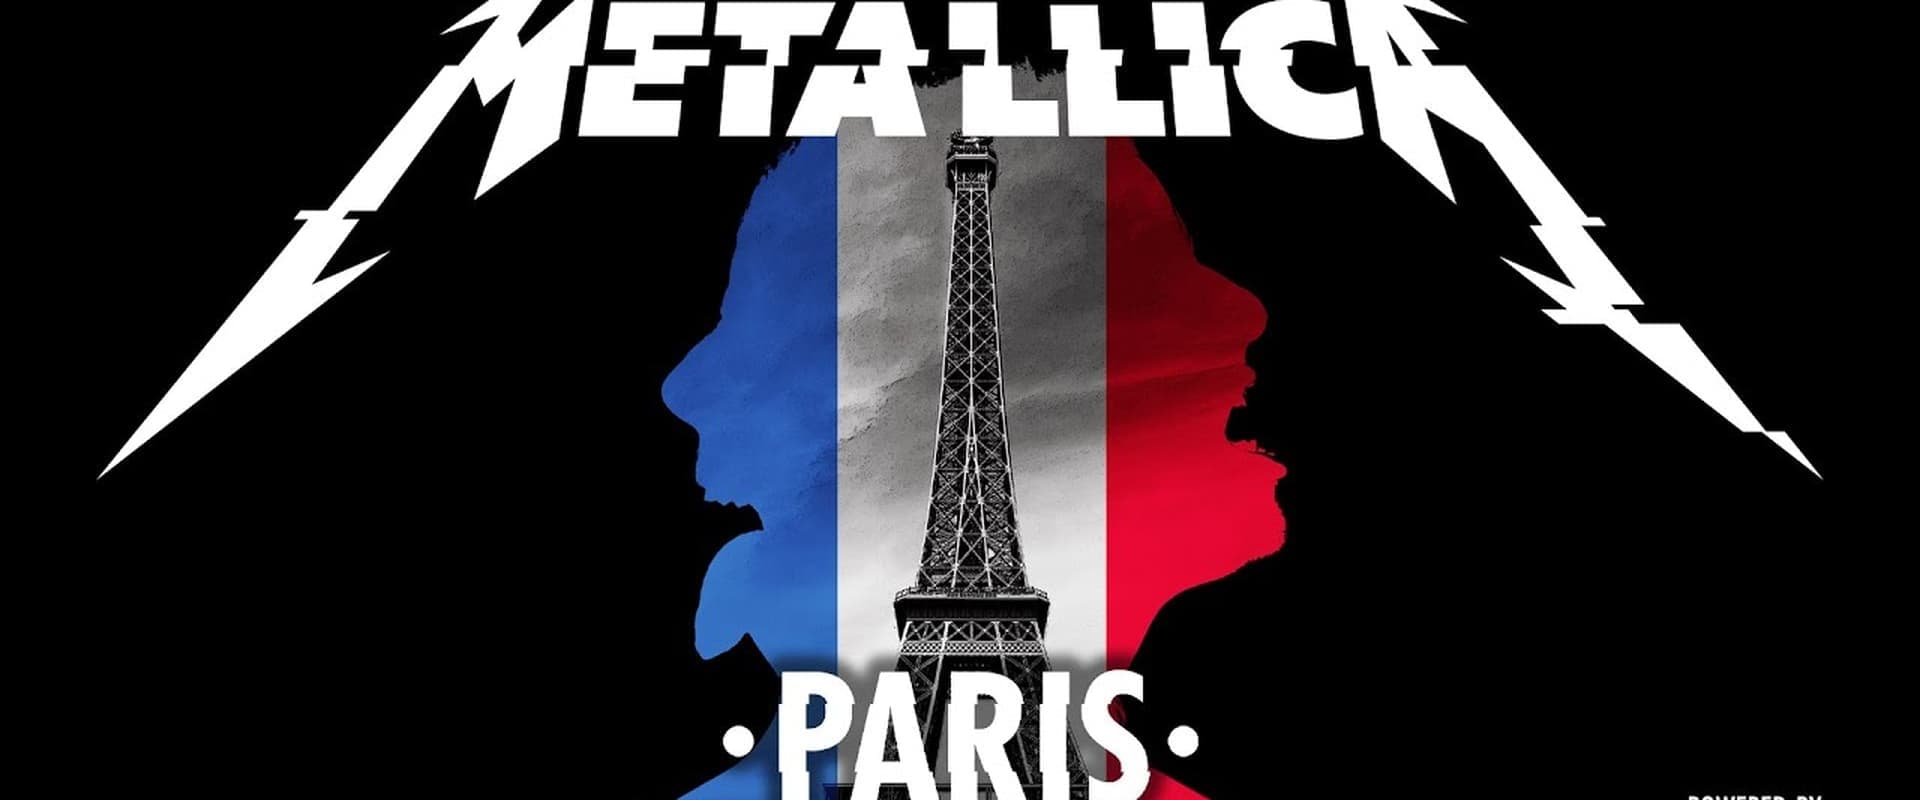 Metallica: Live in Paris, France - Sept 8, 2017